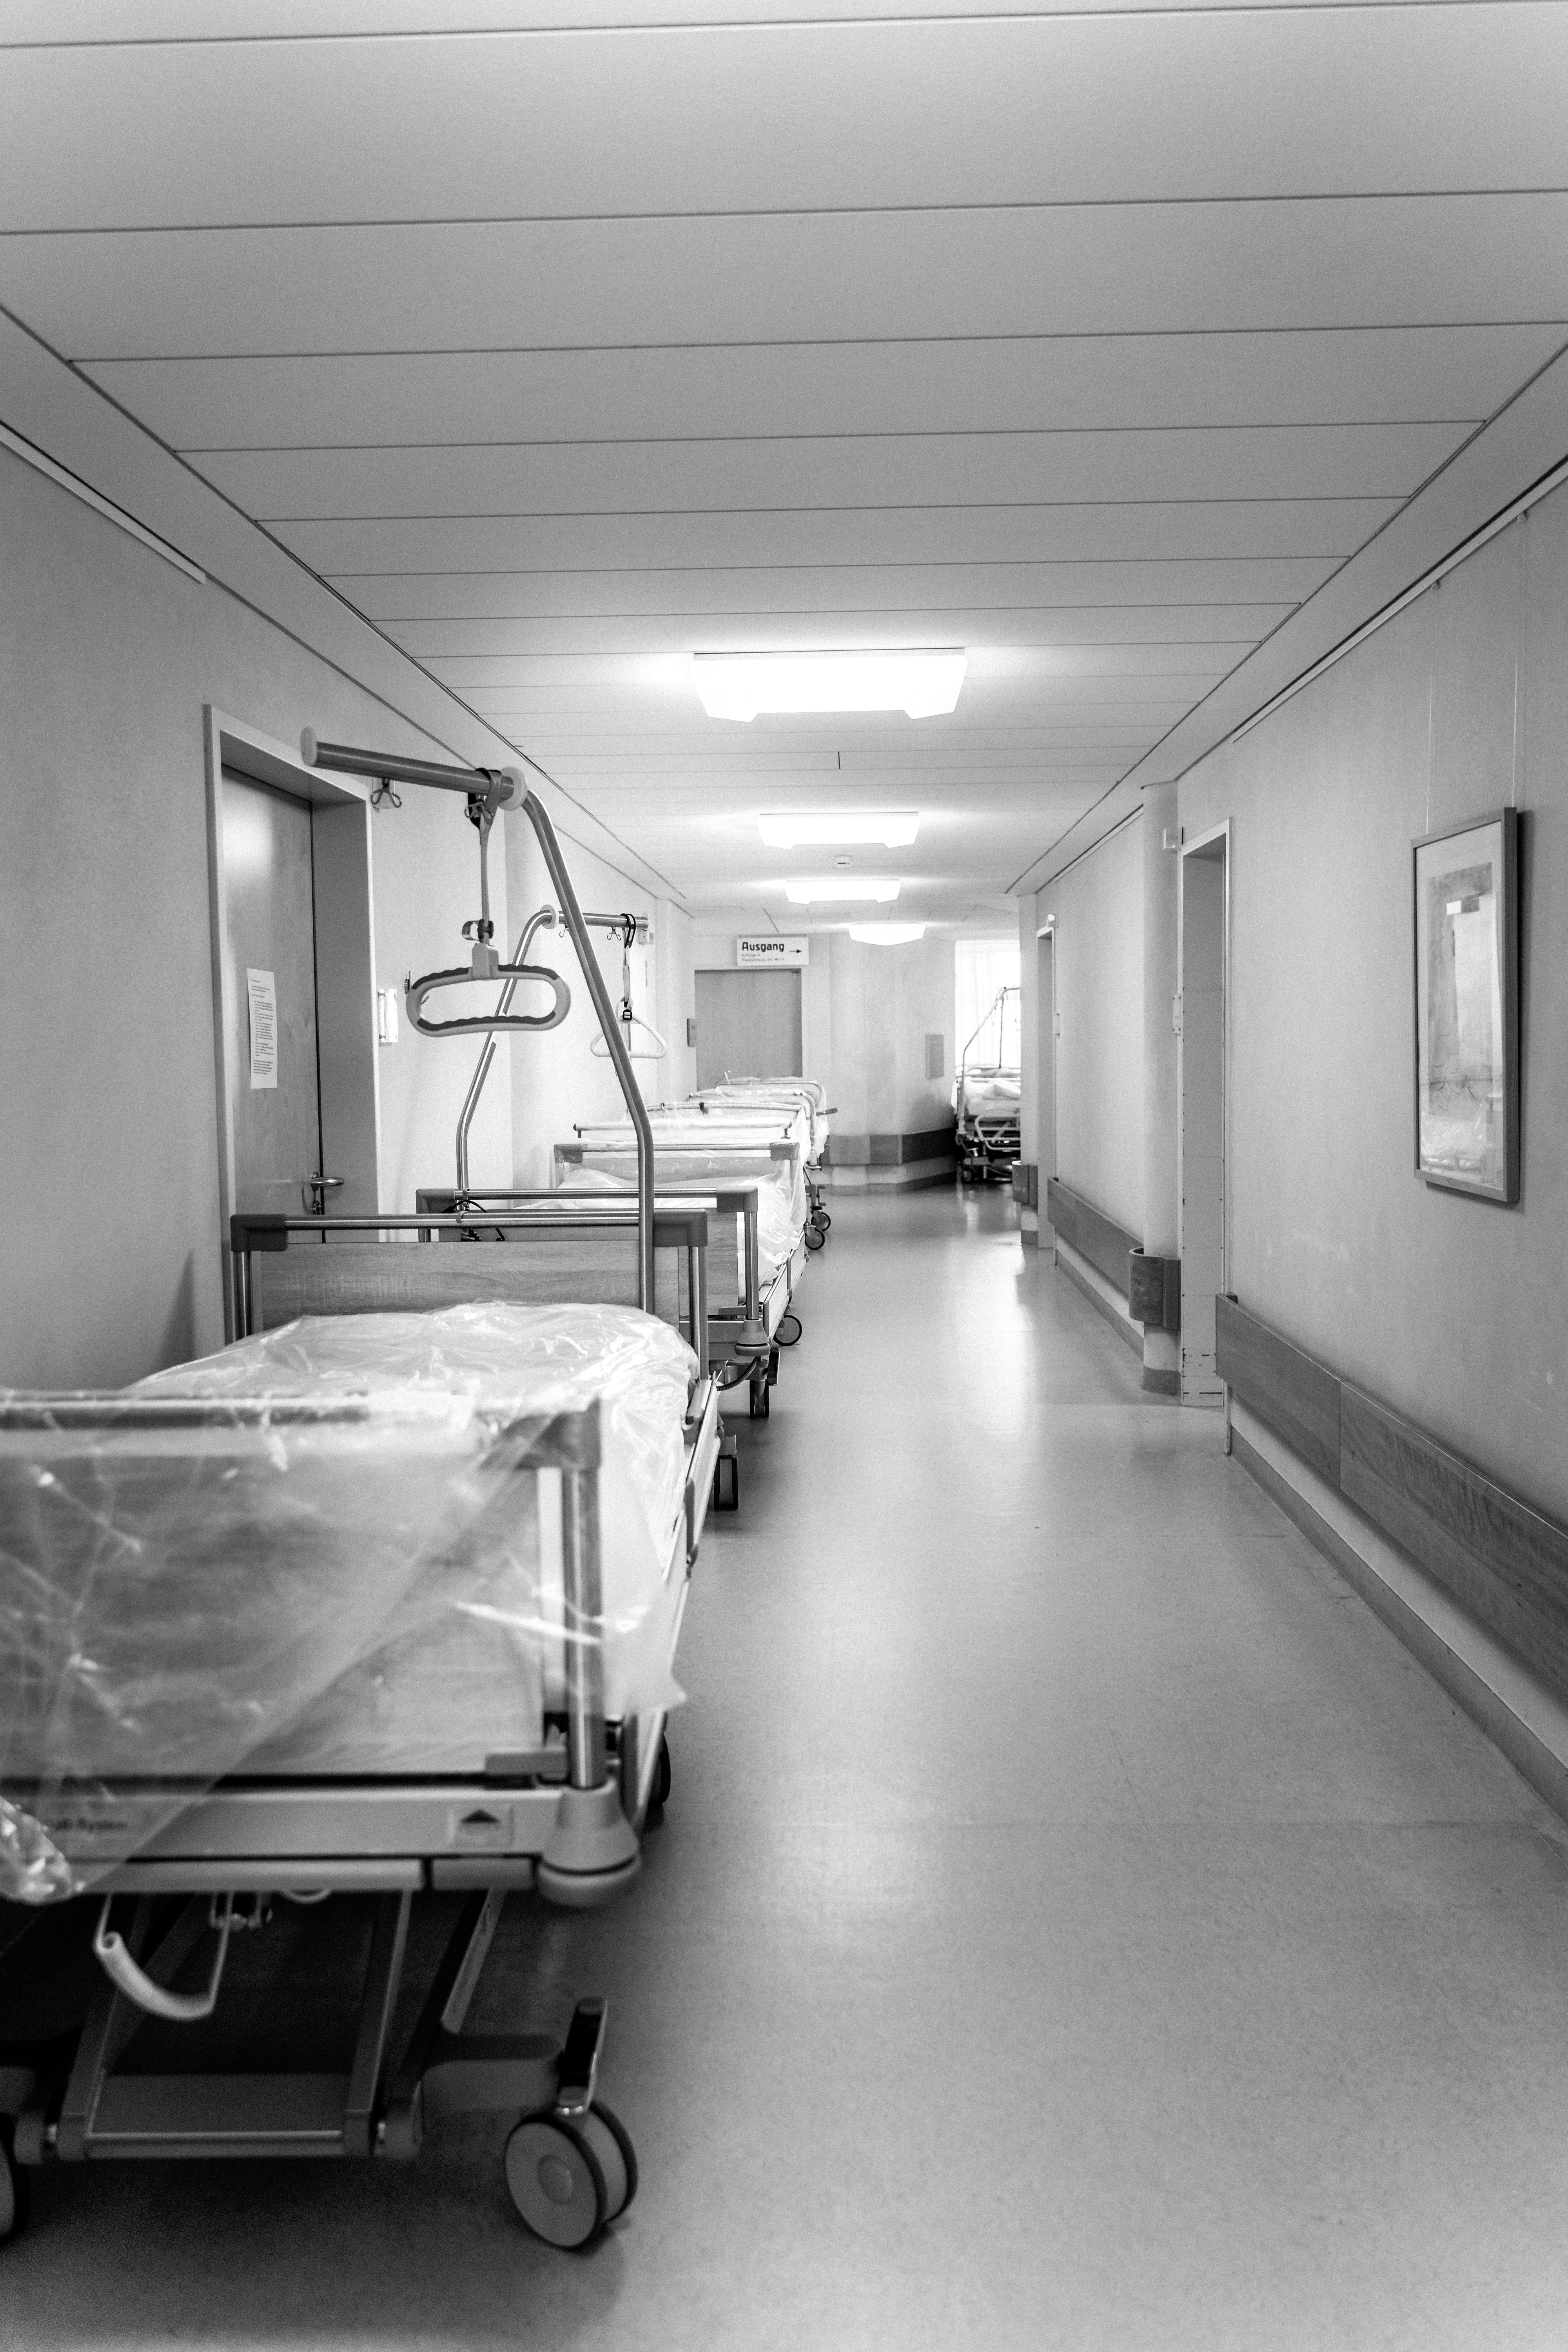 Image of a hospital hallway